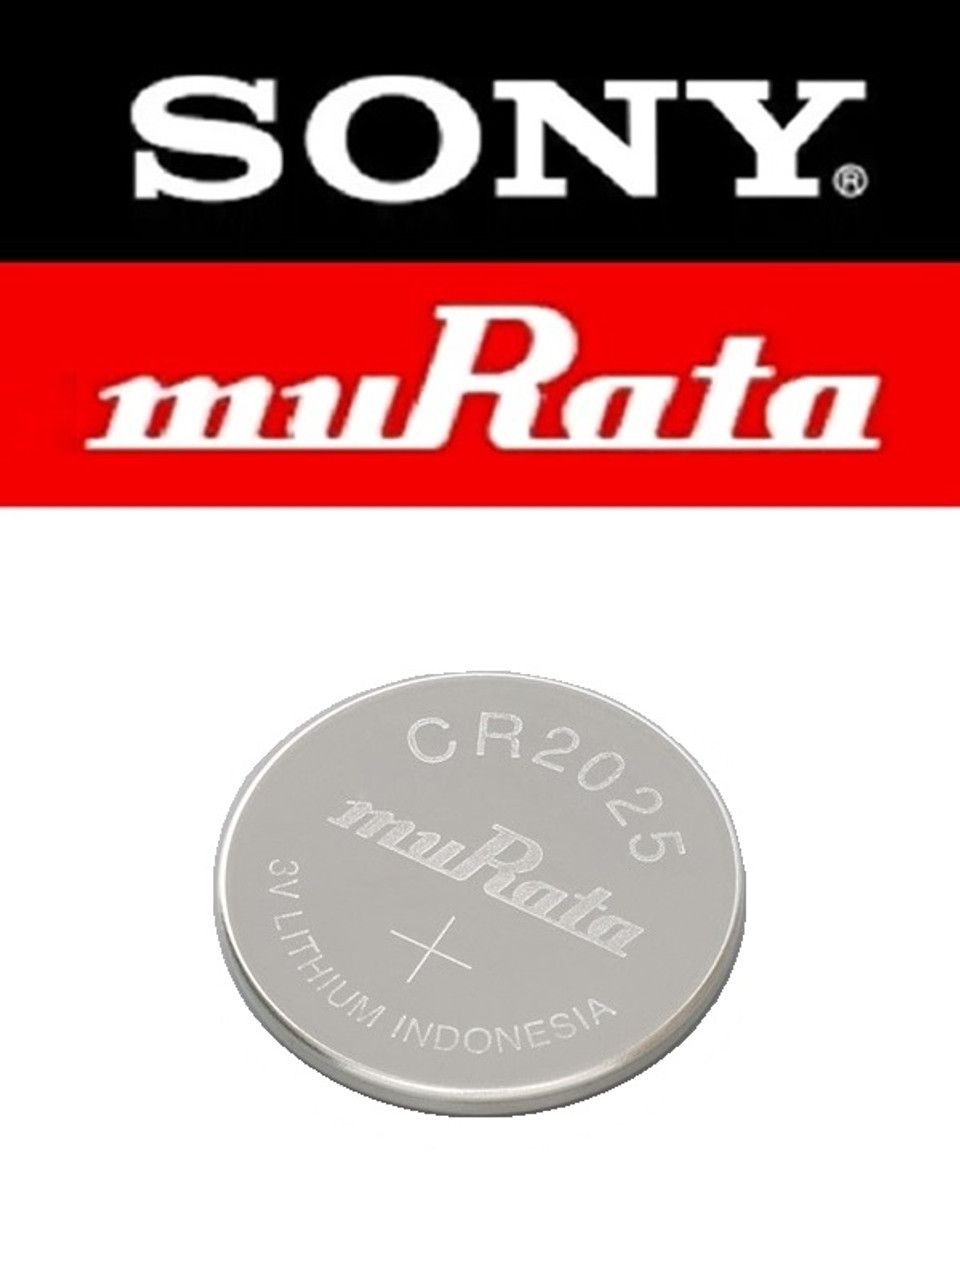 Sony/Murata CR2025, 3 Volt 160mAh Lithium Coin Cell - Blister Pack of 5